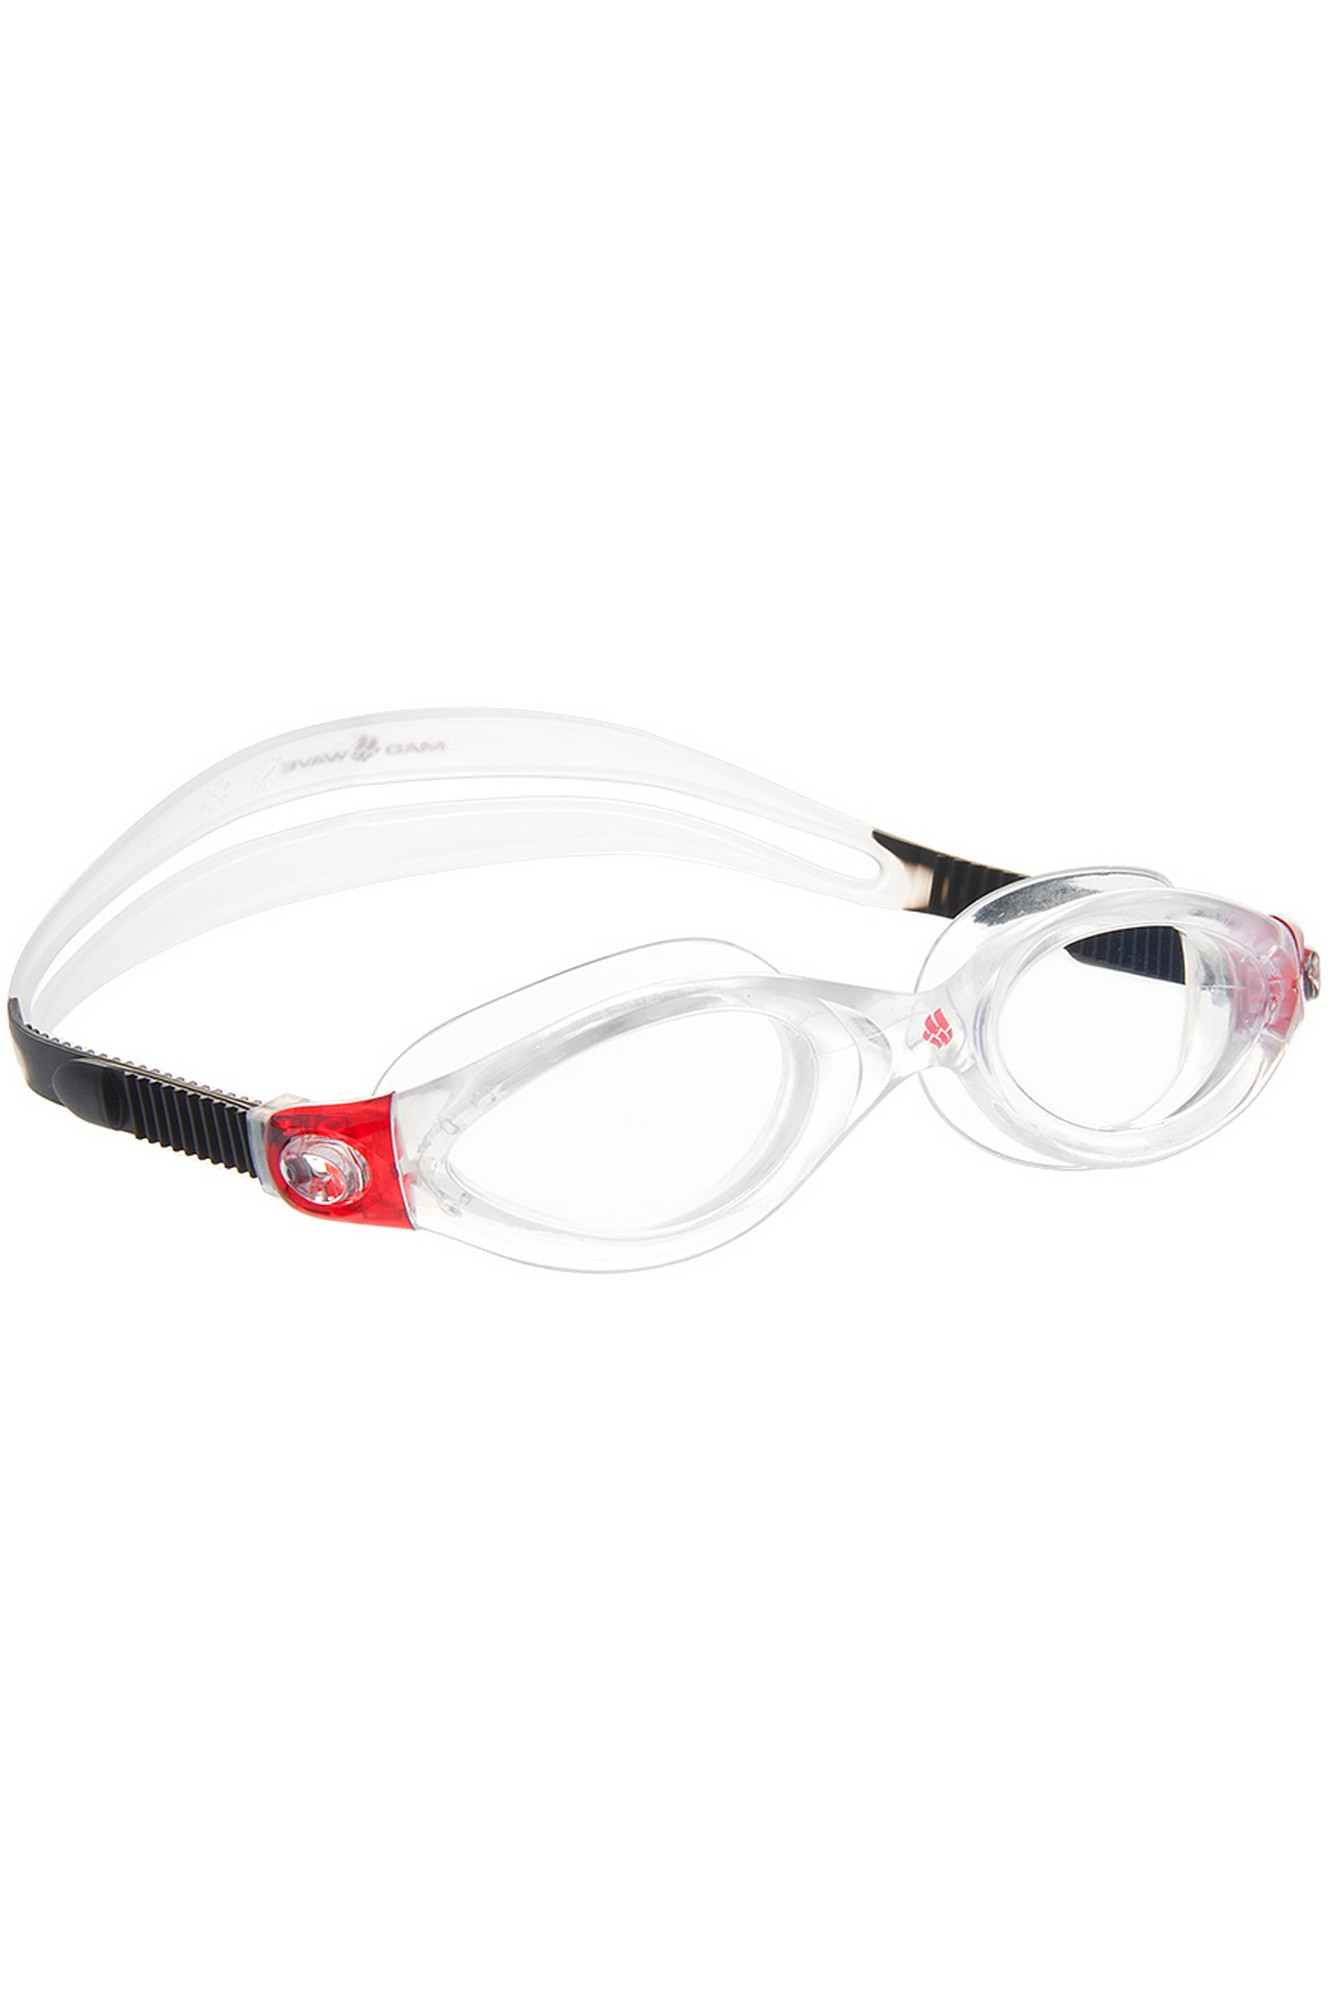 Очки для плавания Mad Wave Clear Vision CP Lens M0431 06 0 05W,  - купить со скидкой